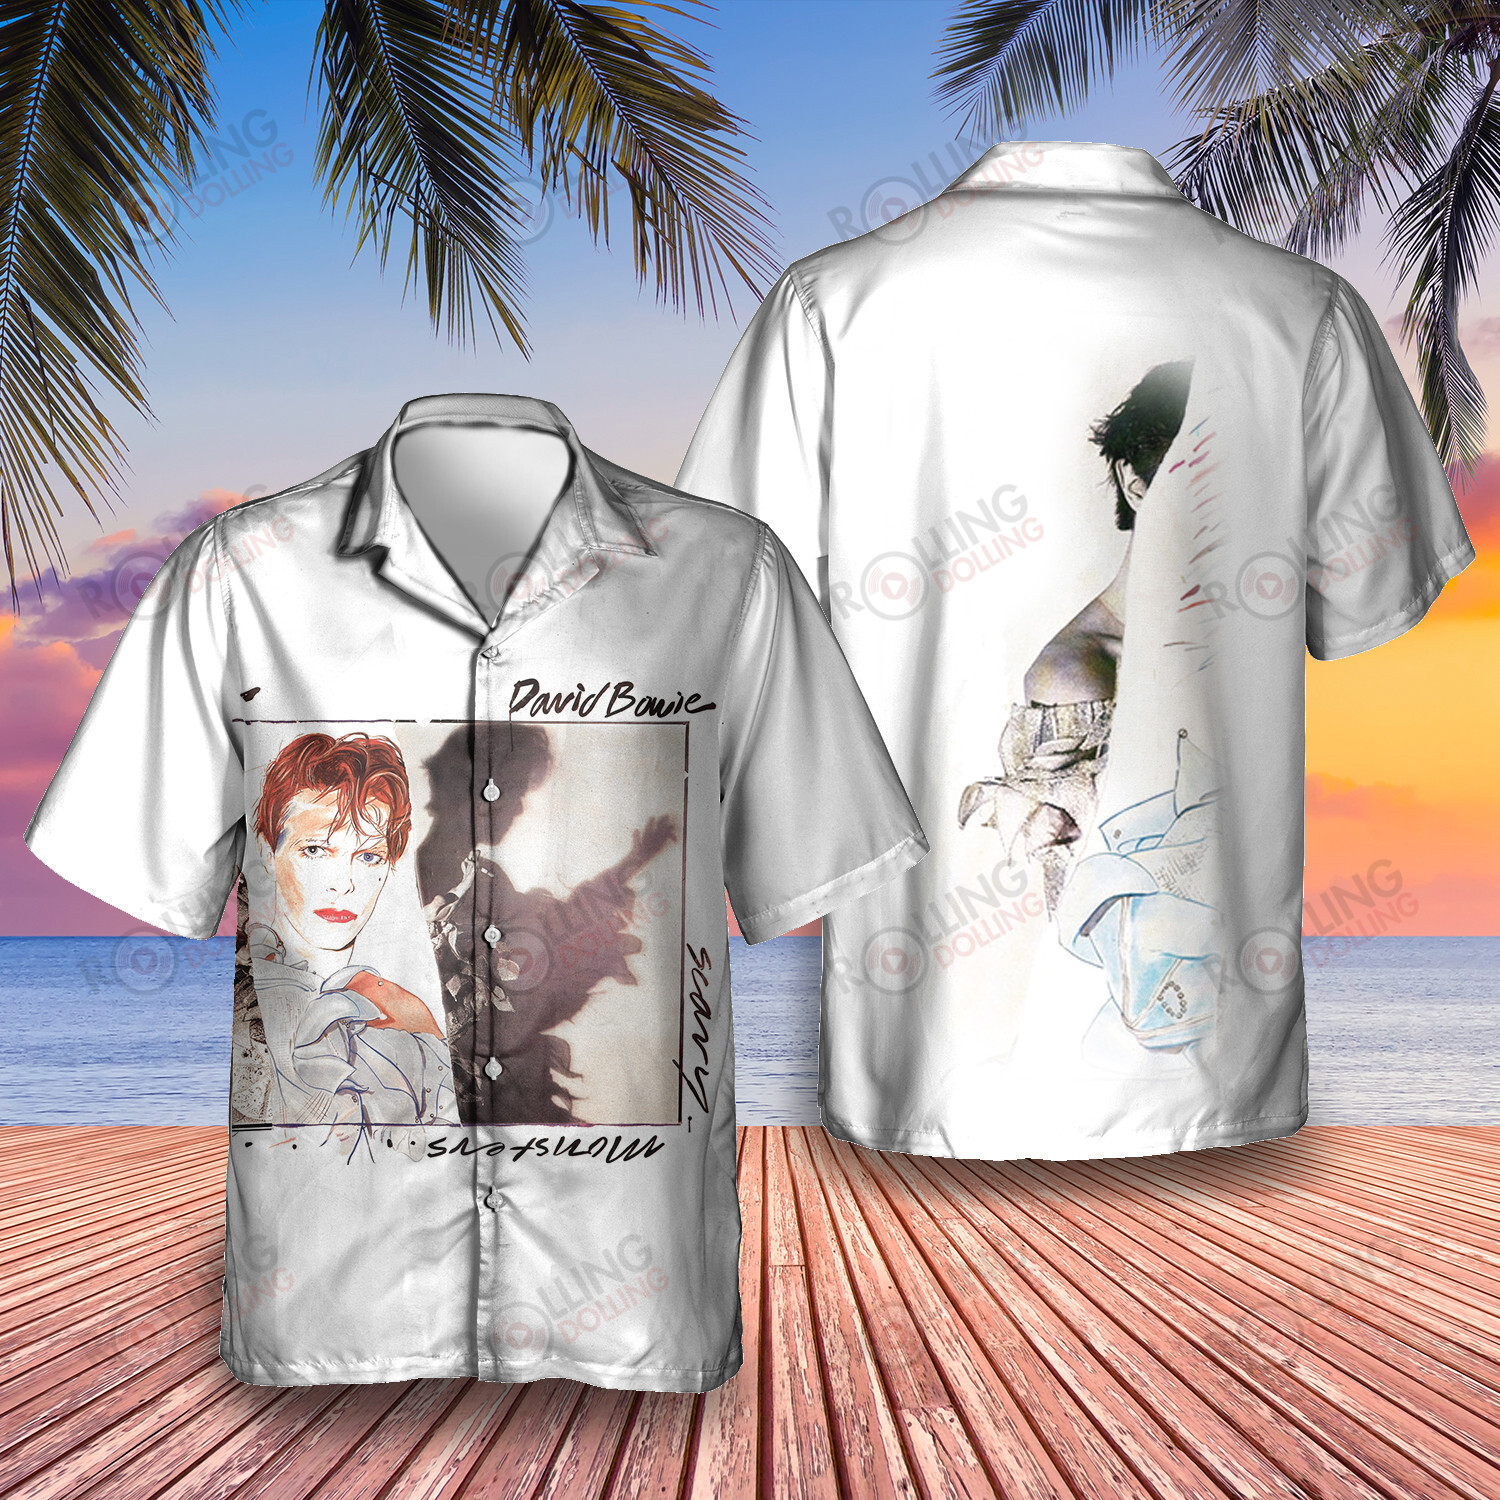 Regardless of their style, you will feel comfortable wearing Hawaiian Shirt 90